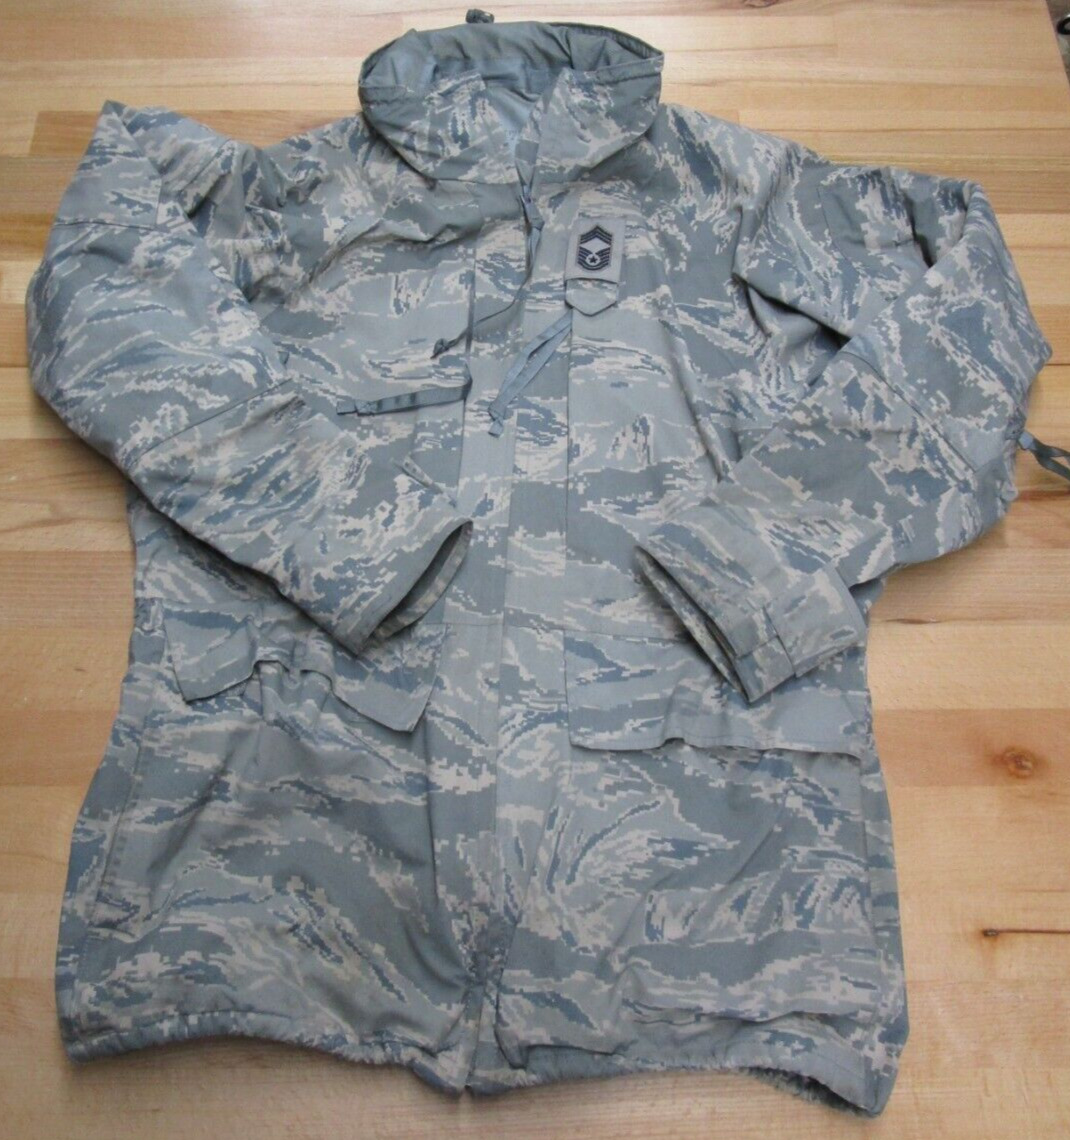 USAF Parka All-Purpose Environmental Camouflage 8415-01-547-3513 Medium Regular